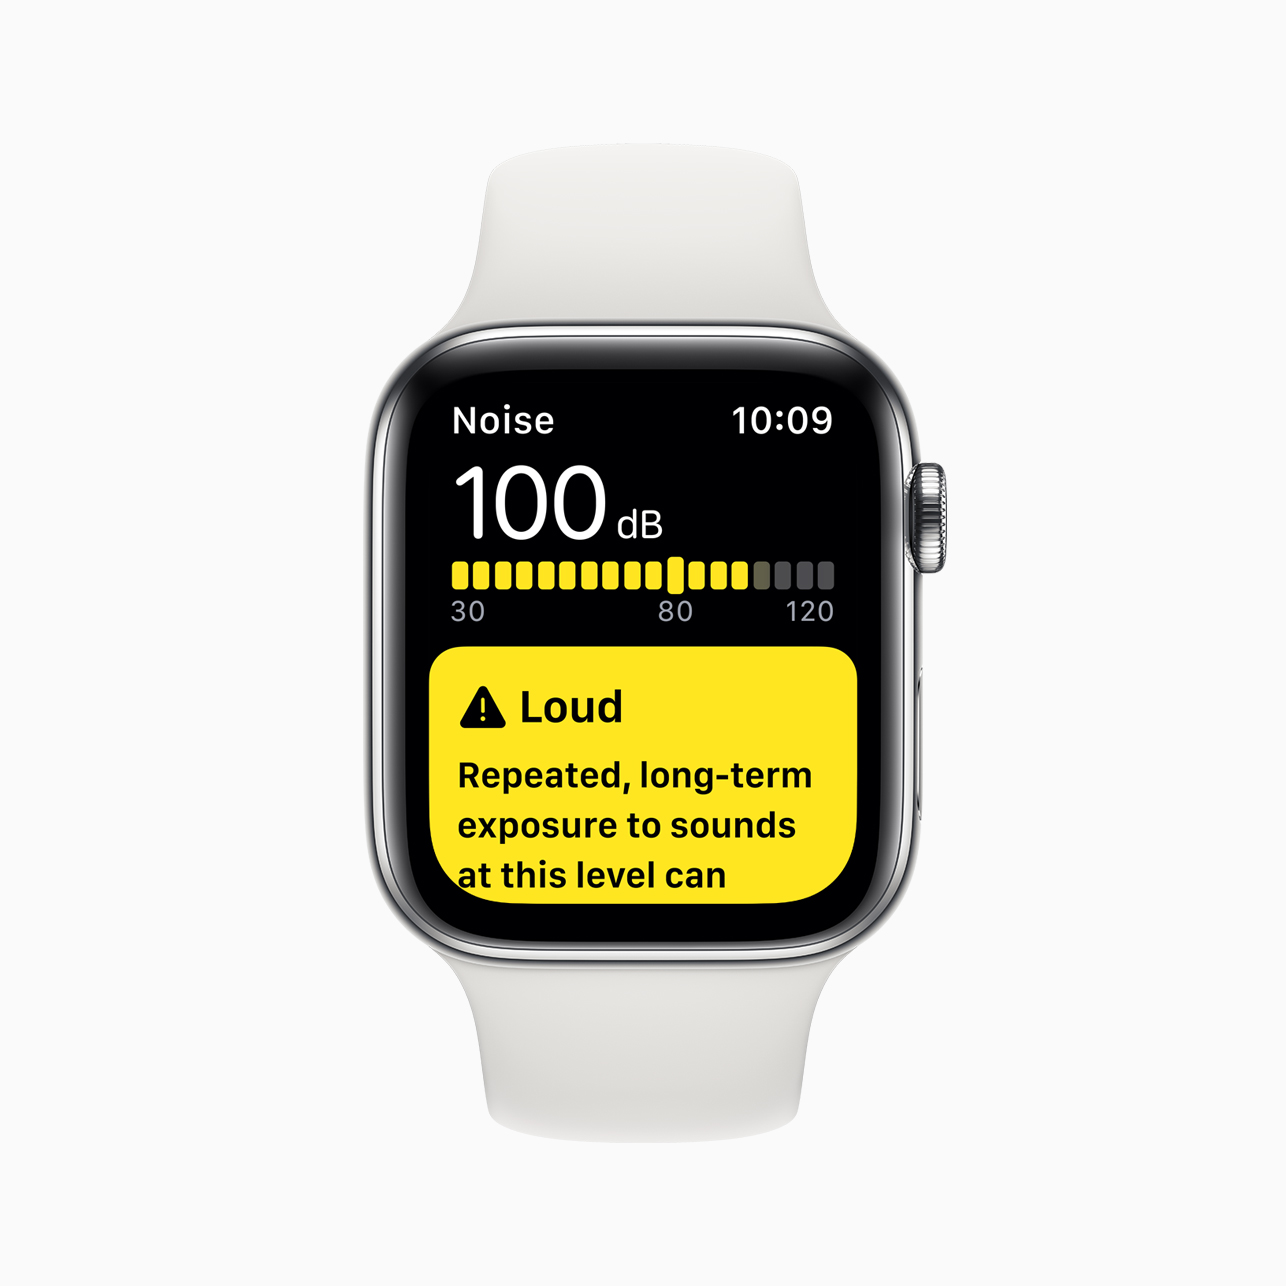 Apple Watch Seri 5 diumumkan dengan Layar Retina Selalu Aktif Baru dengan Tingkat Penyegaran Variabel & Masa Pakai Baterai 18 Jam Mulai Dengan Hanya 399 $ AS